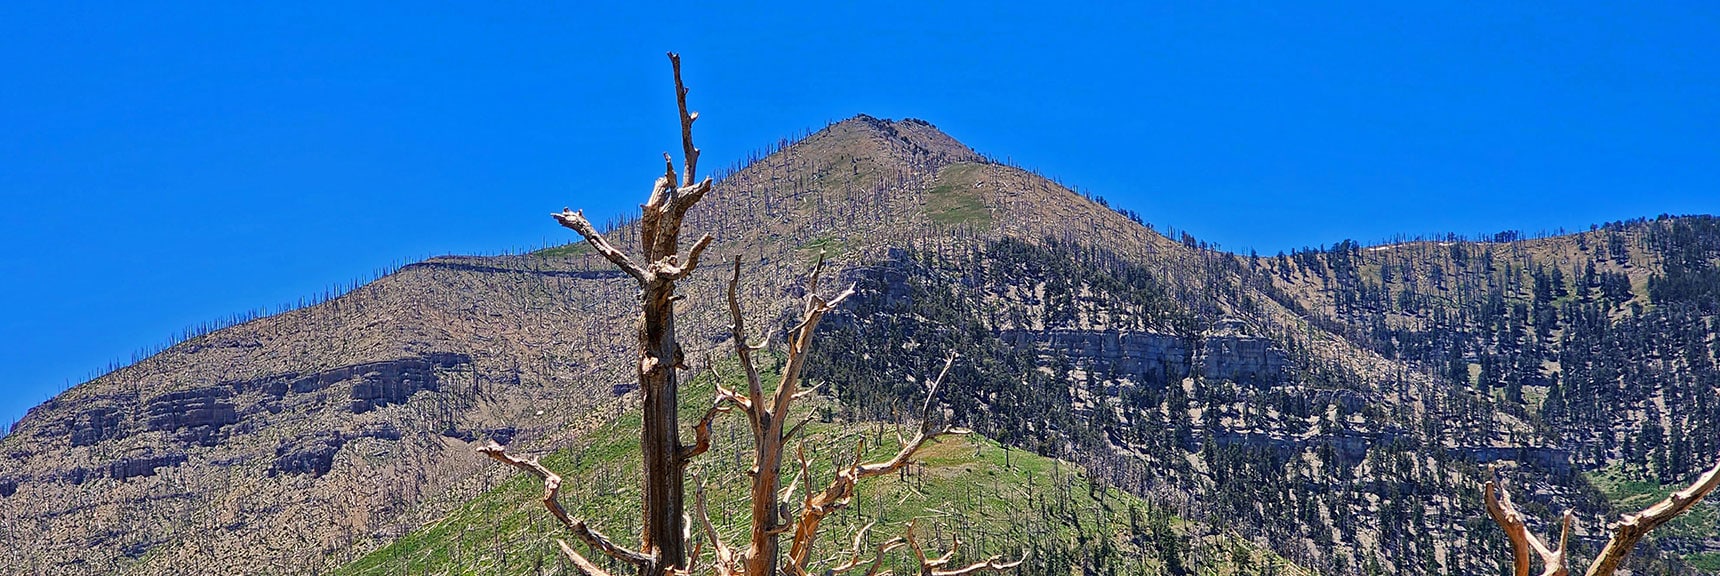 Griffith Peak from Near Harris Mt. Summit. | Fletcher Canyon to Harris Mountain Summit | Mt Charleston Wilderness, Nevada